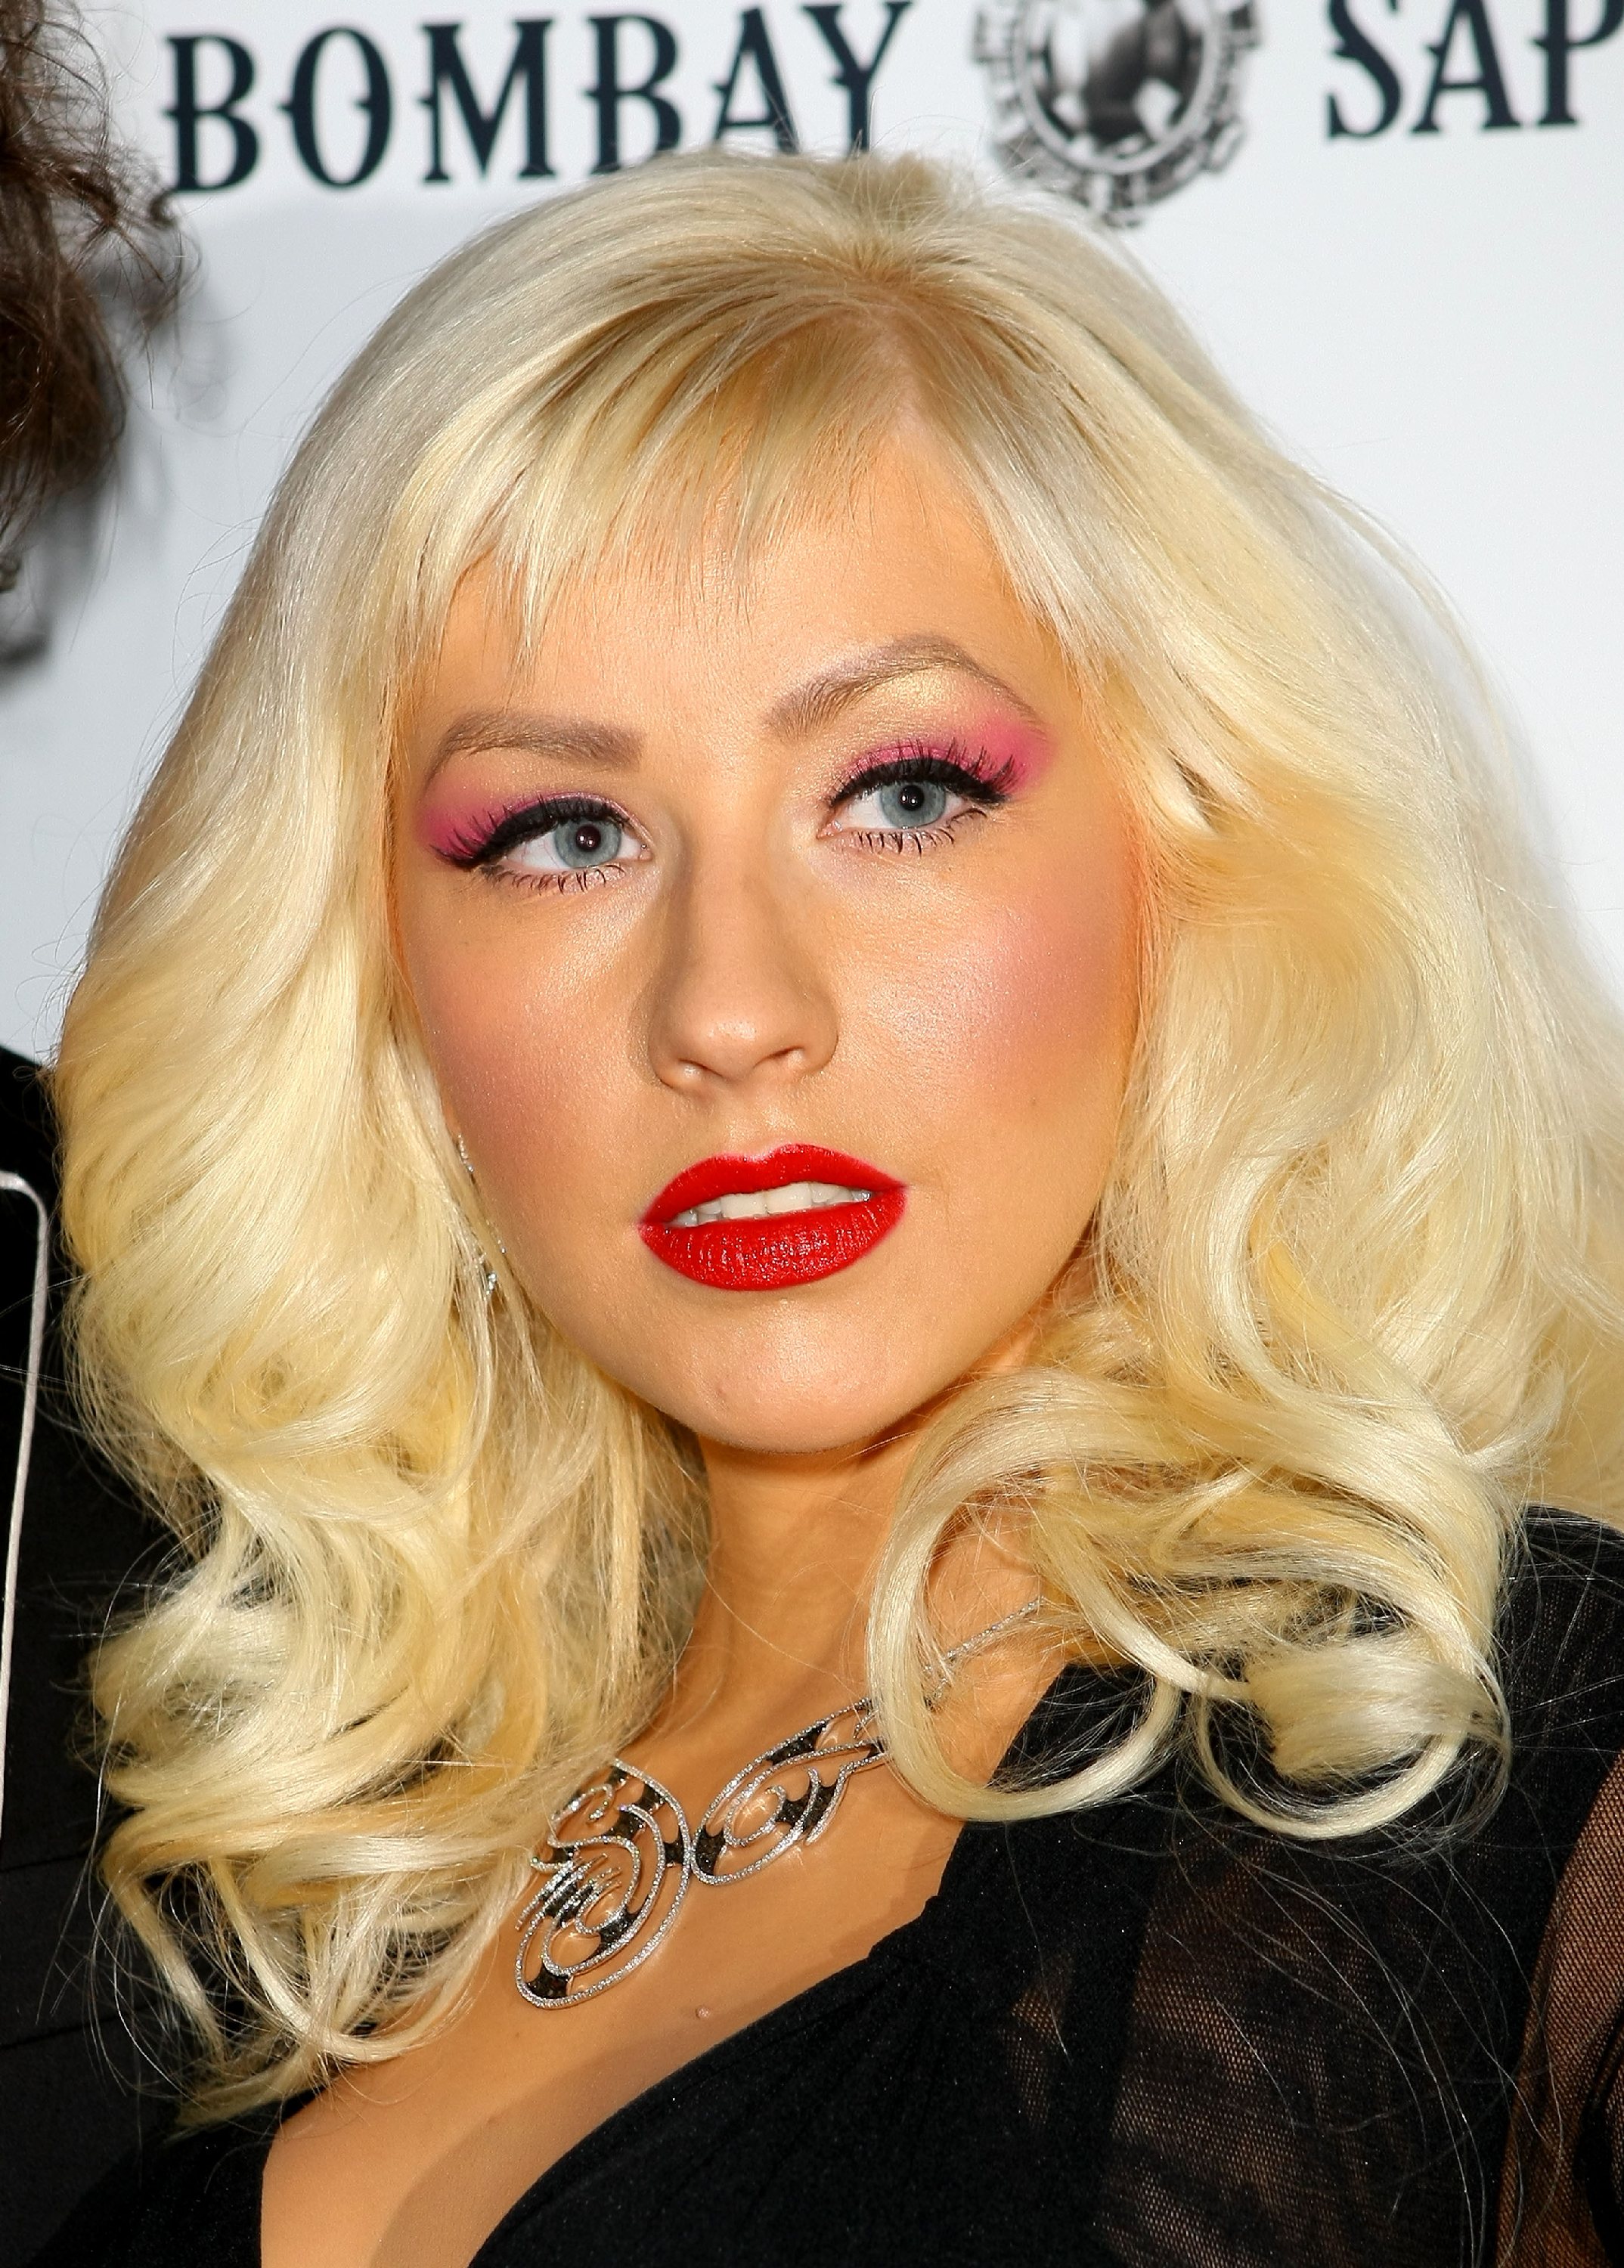 Christina Aguilera photo 4568 of 10845 pics, wallpaper - photo #480328 ...